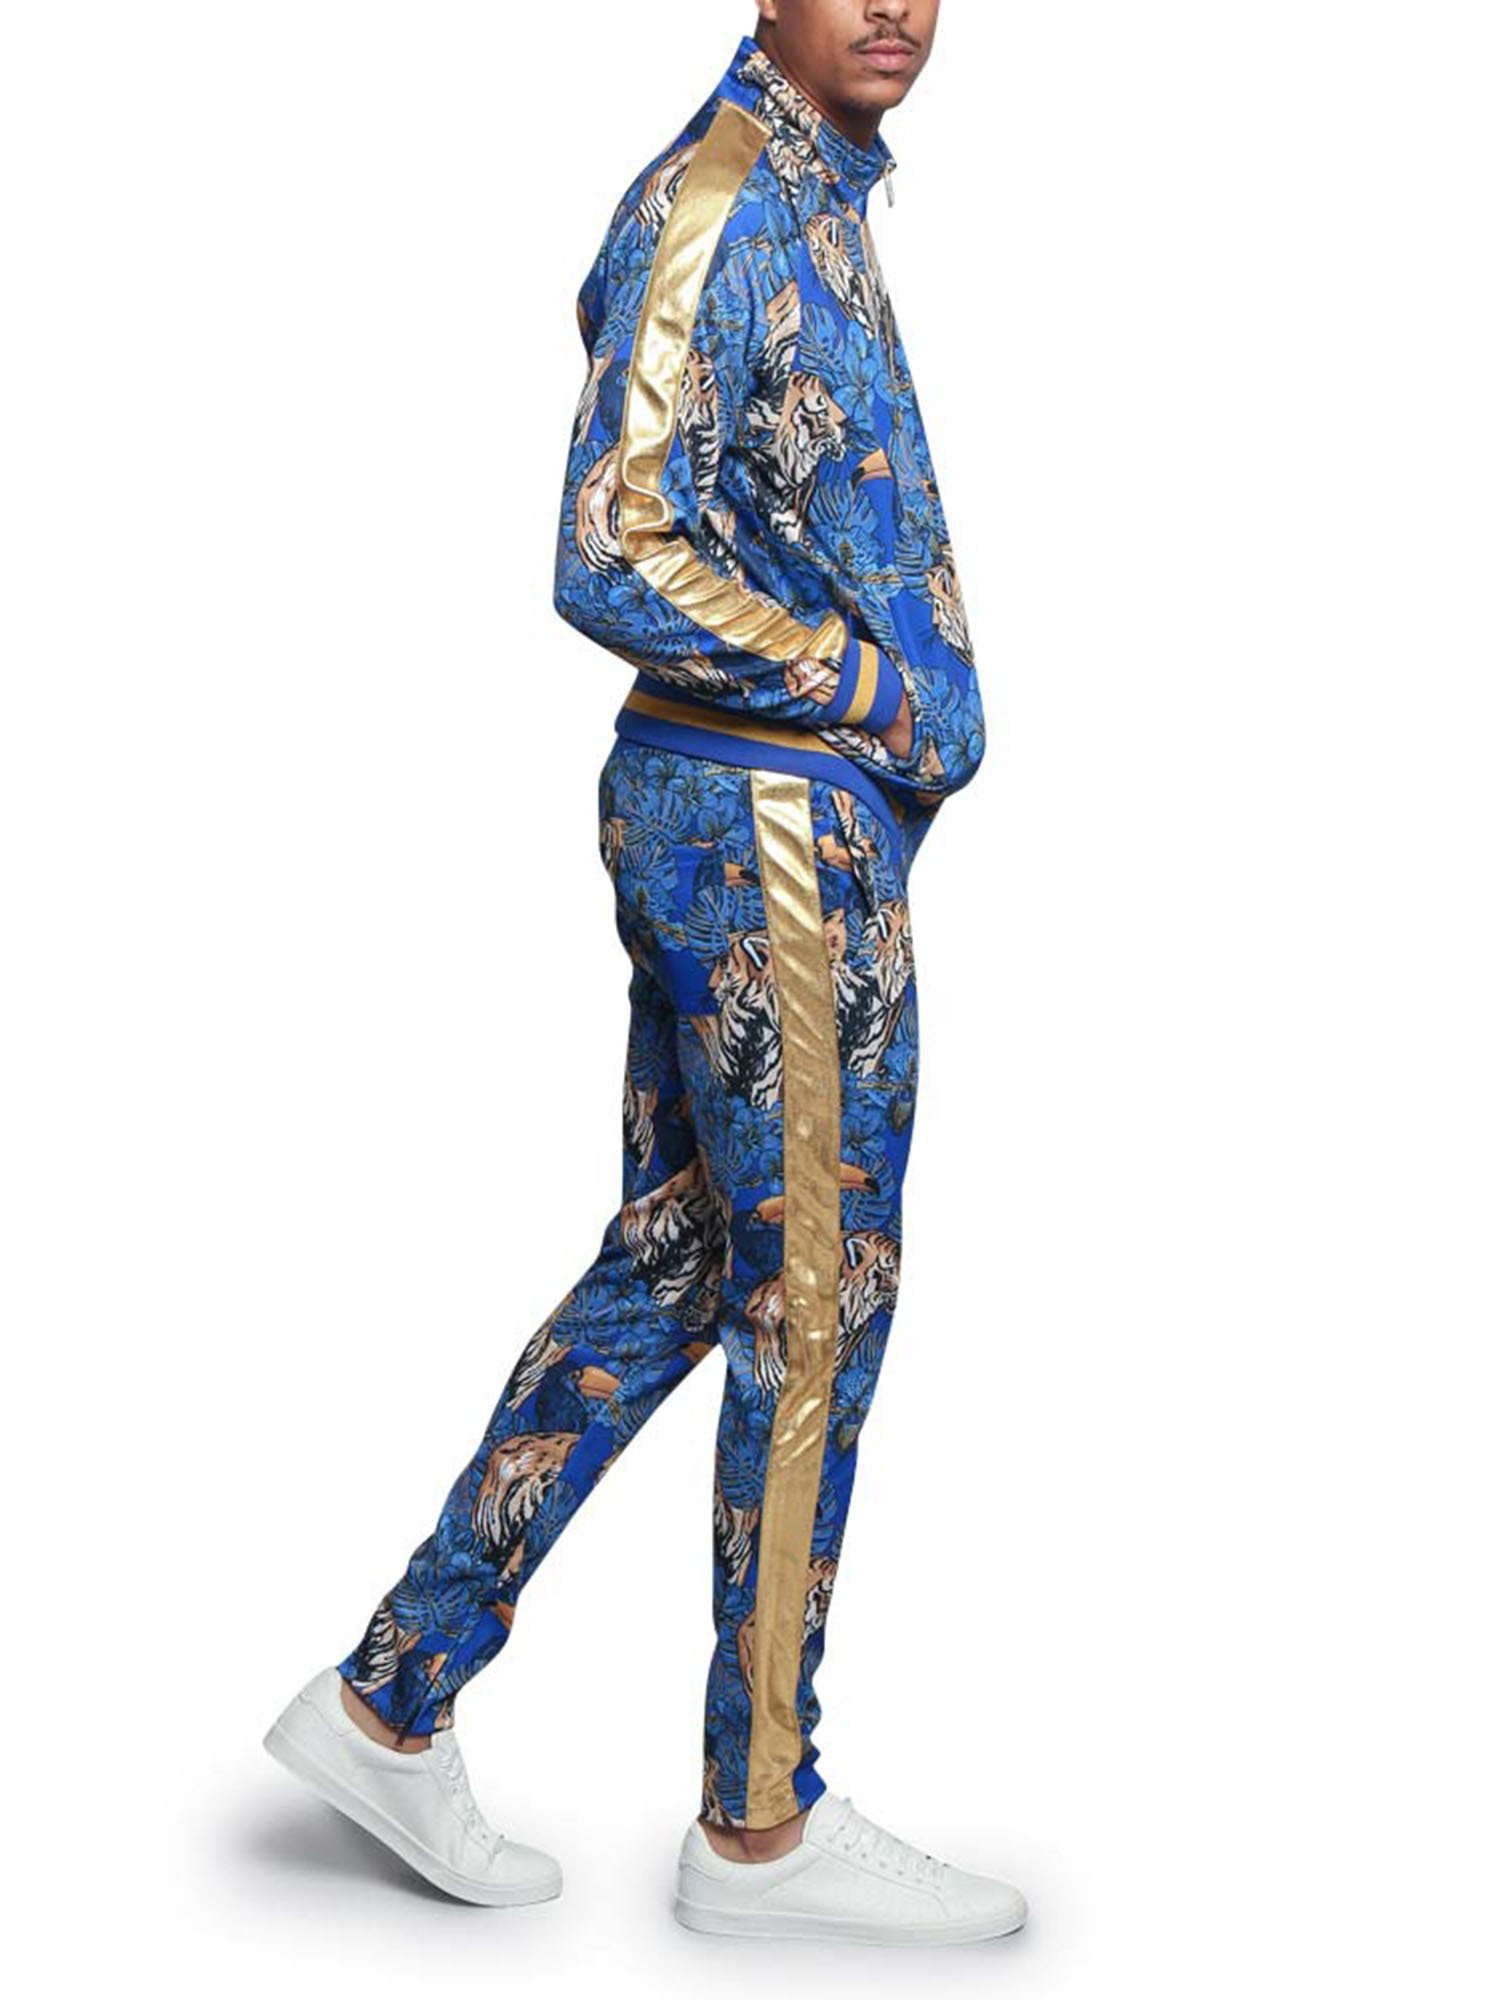 G-Style USA Men's Royal Floral Tiger Track Suit Set, Up to 5X - Walmart.com